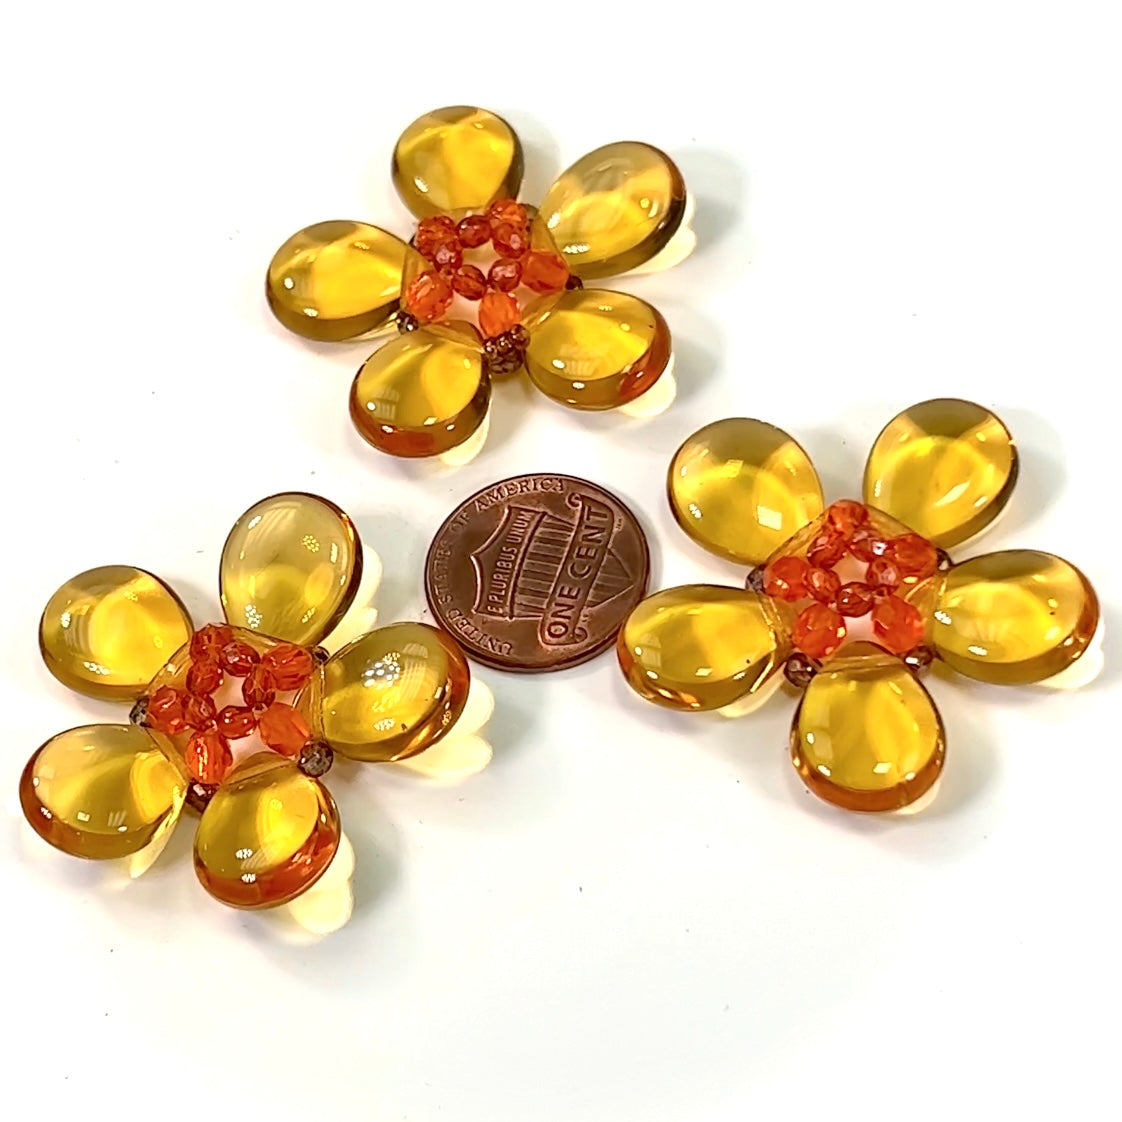 Czech Glass Beads 1.5 inch Flower Ornament Topaz Light Brown and Orange Combination 1 piece CA010